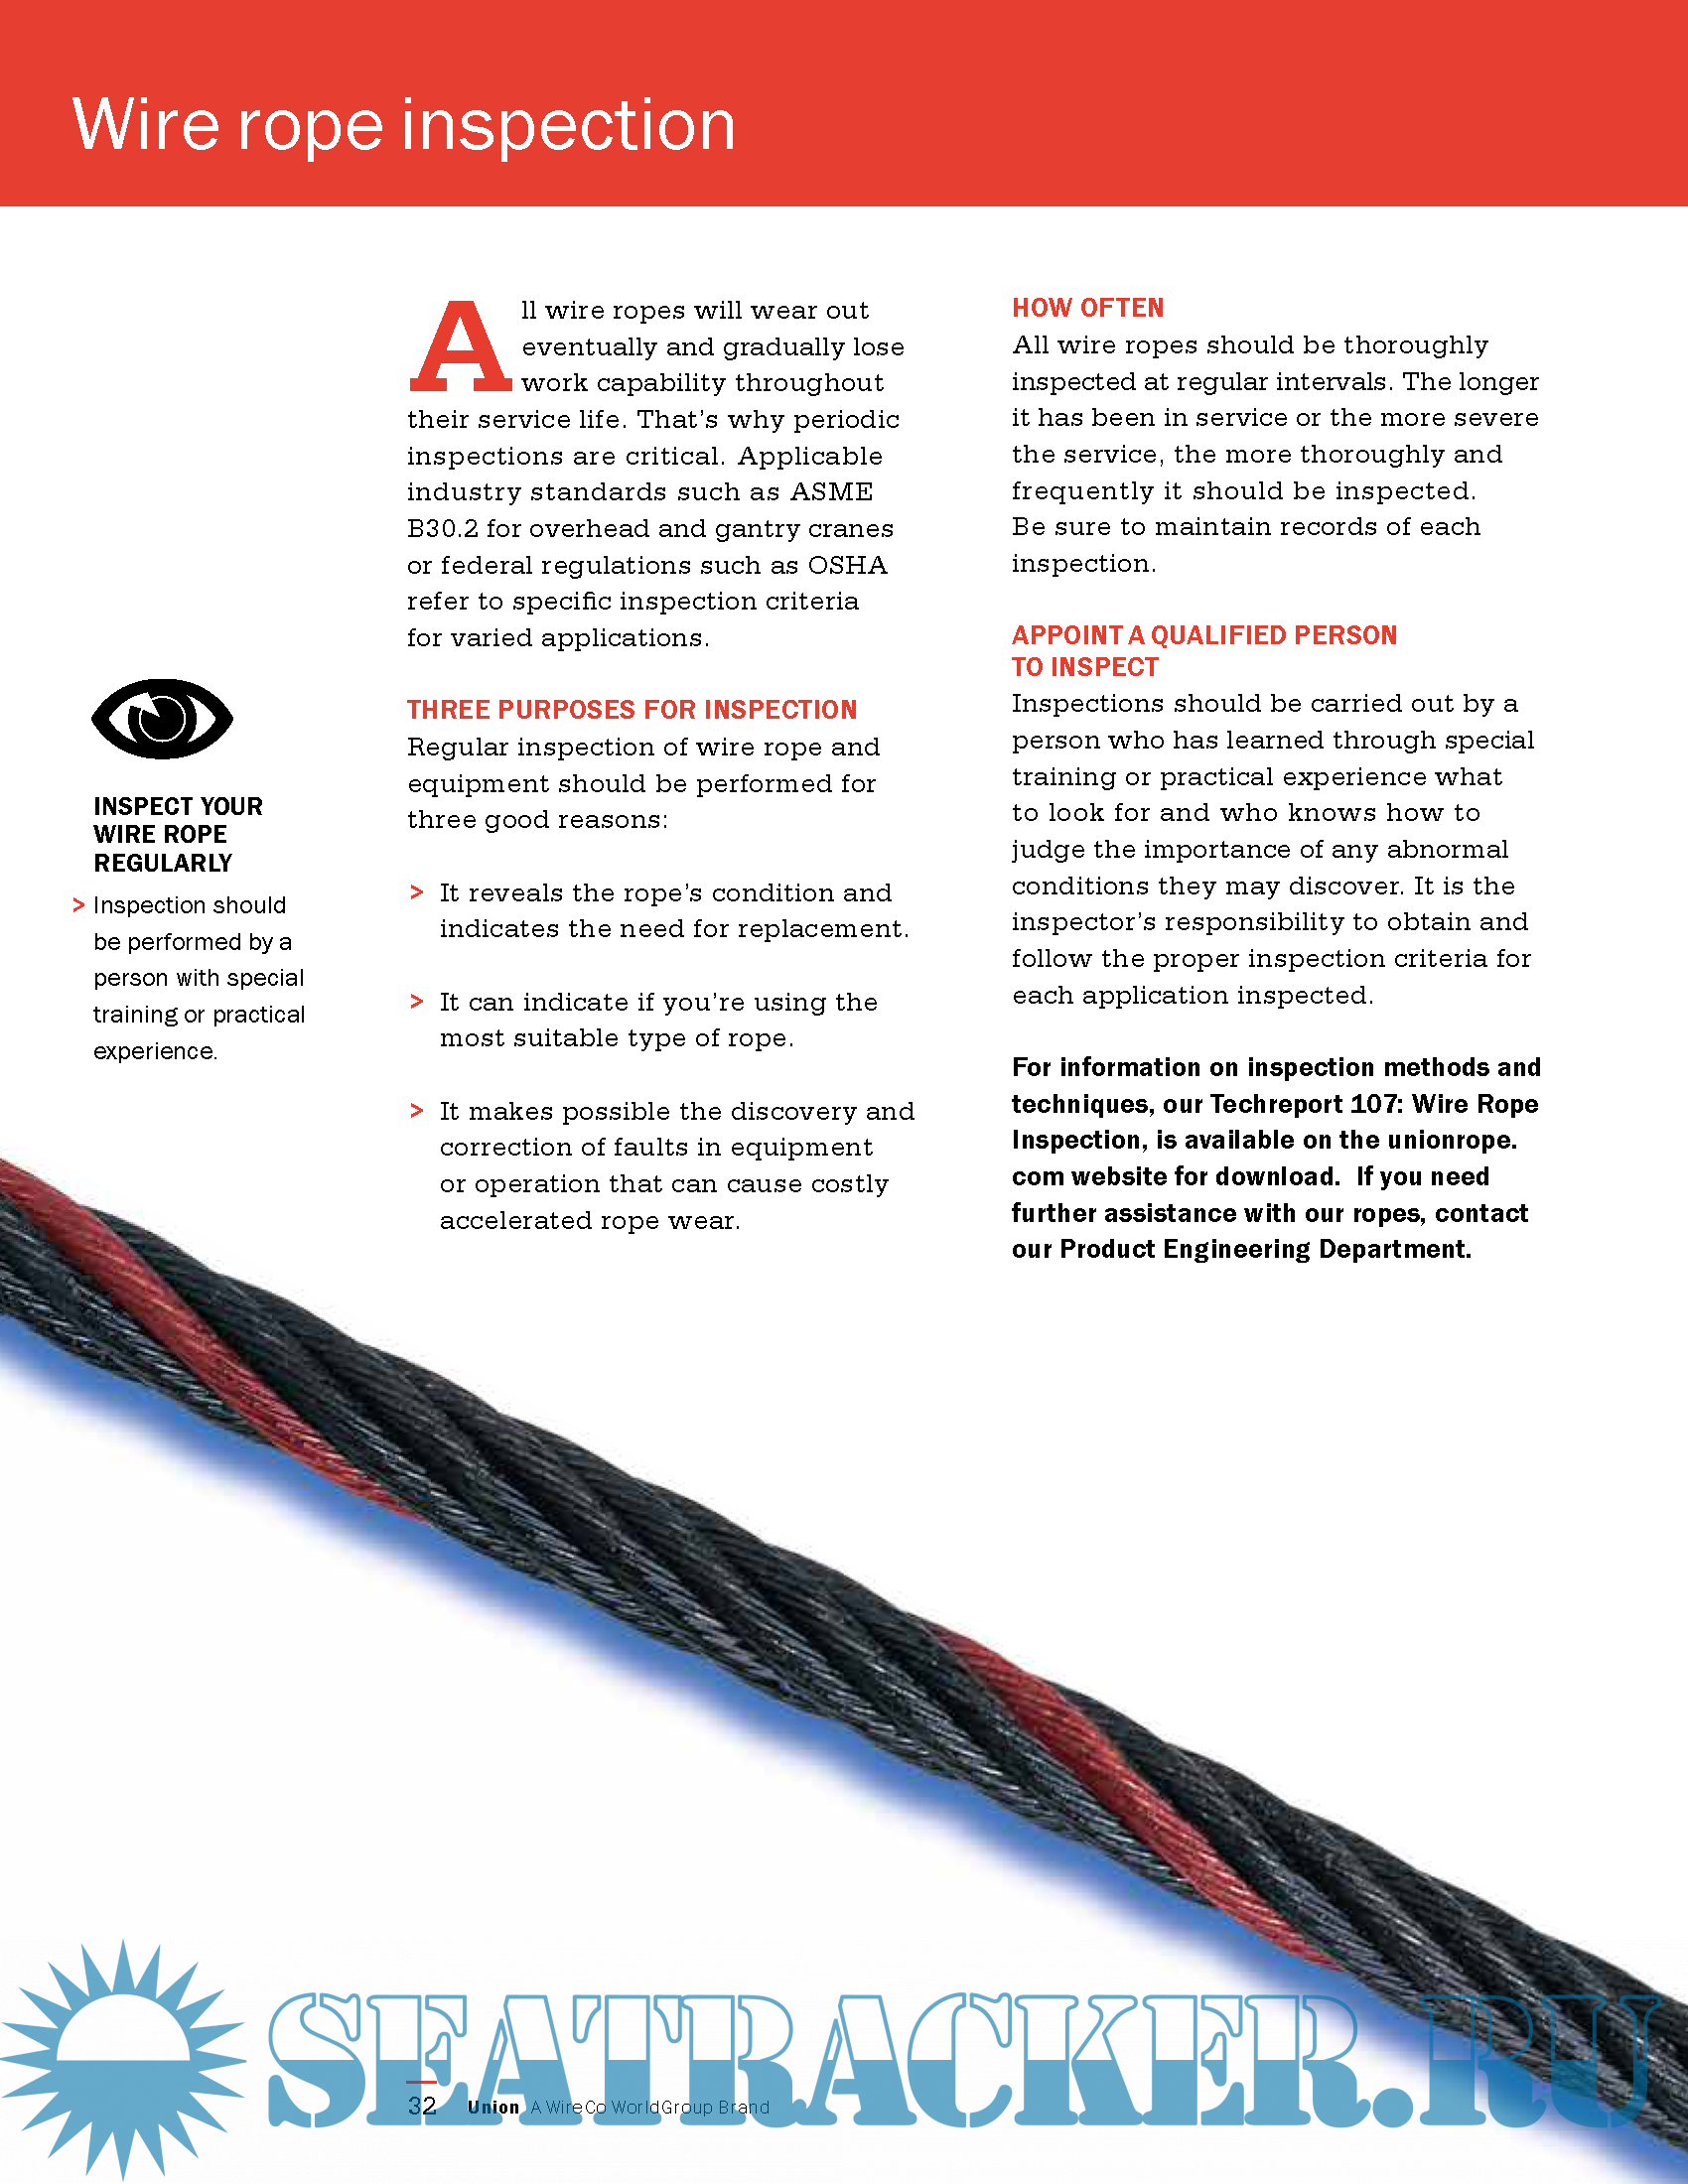 Wire Rope User’s Handbook (Form No. 1001M) Union A WireCo WorldGroup Brand [2016, PDF